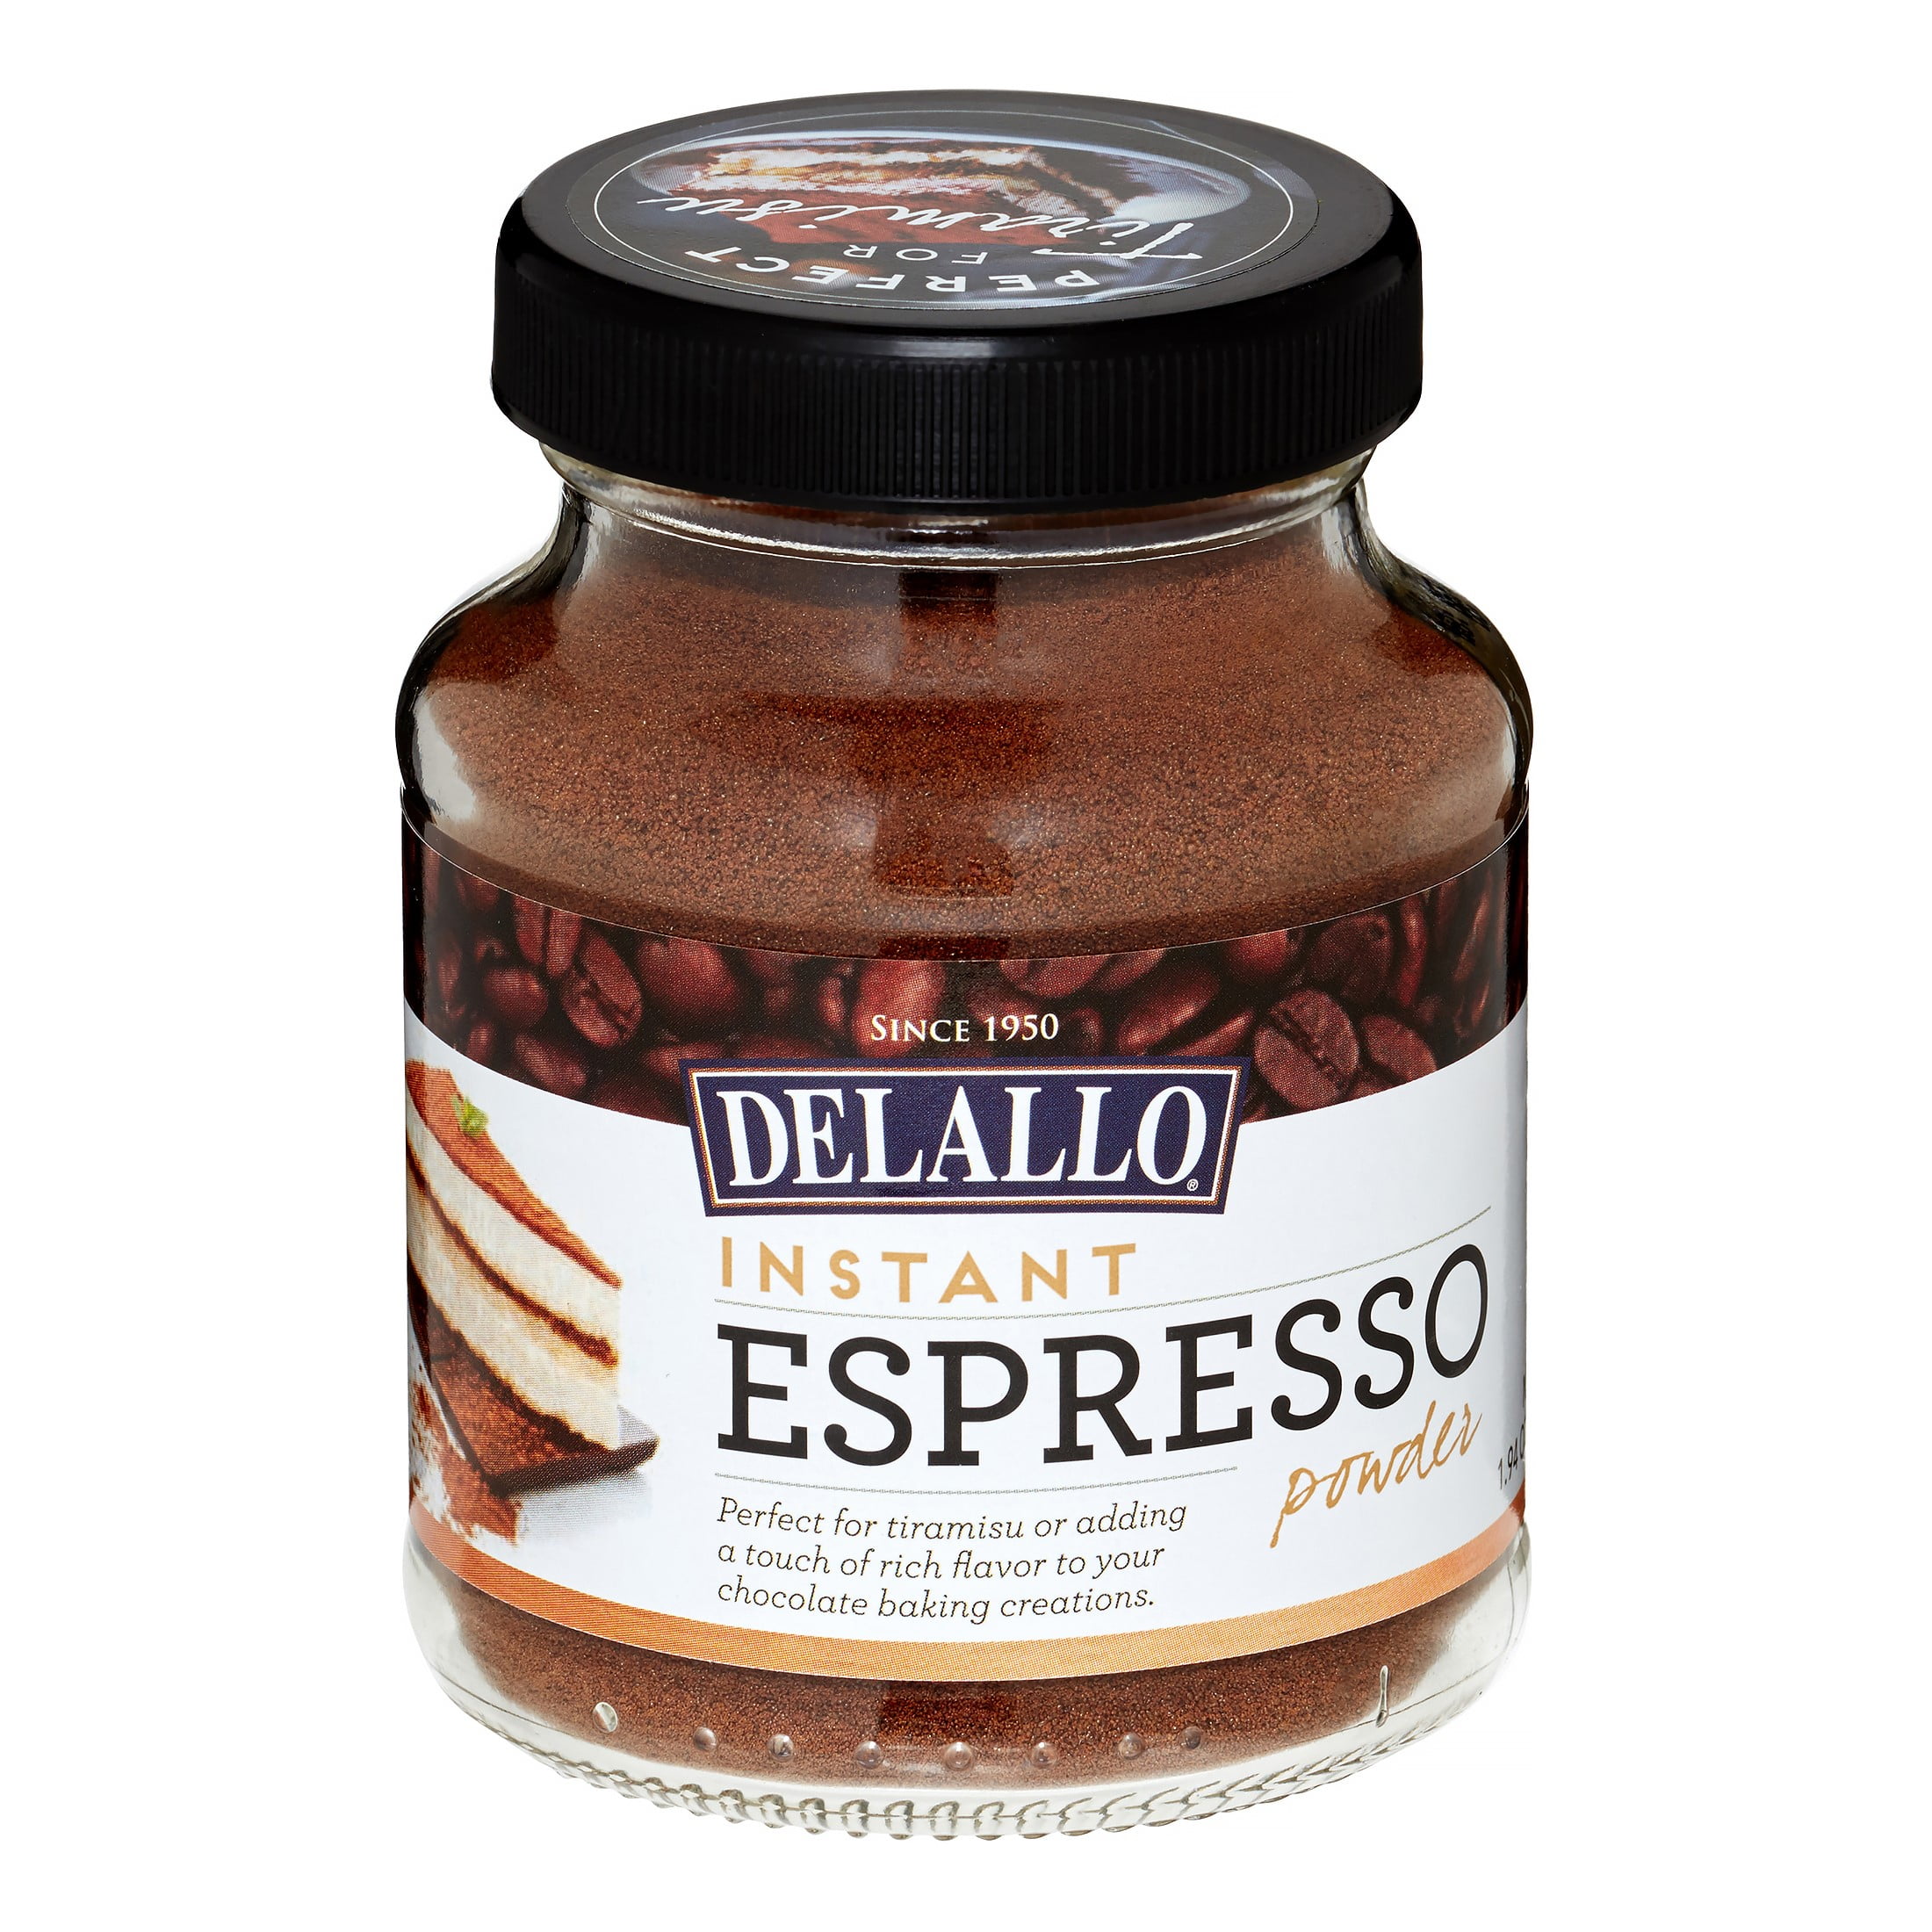 Delallo Instant Espresso Powder 1 94 Oz Jar Walmart Com Walmart Com